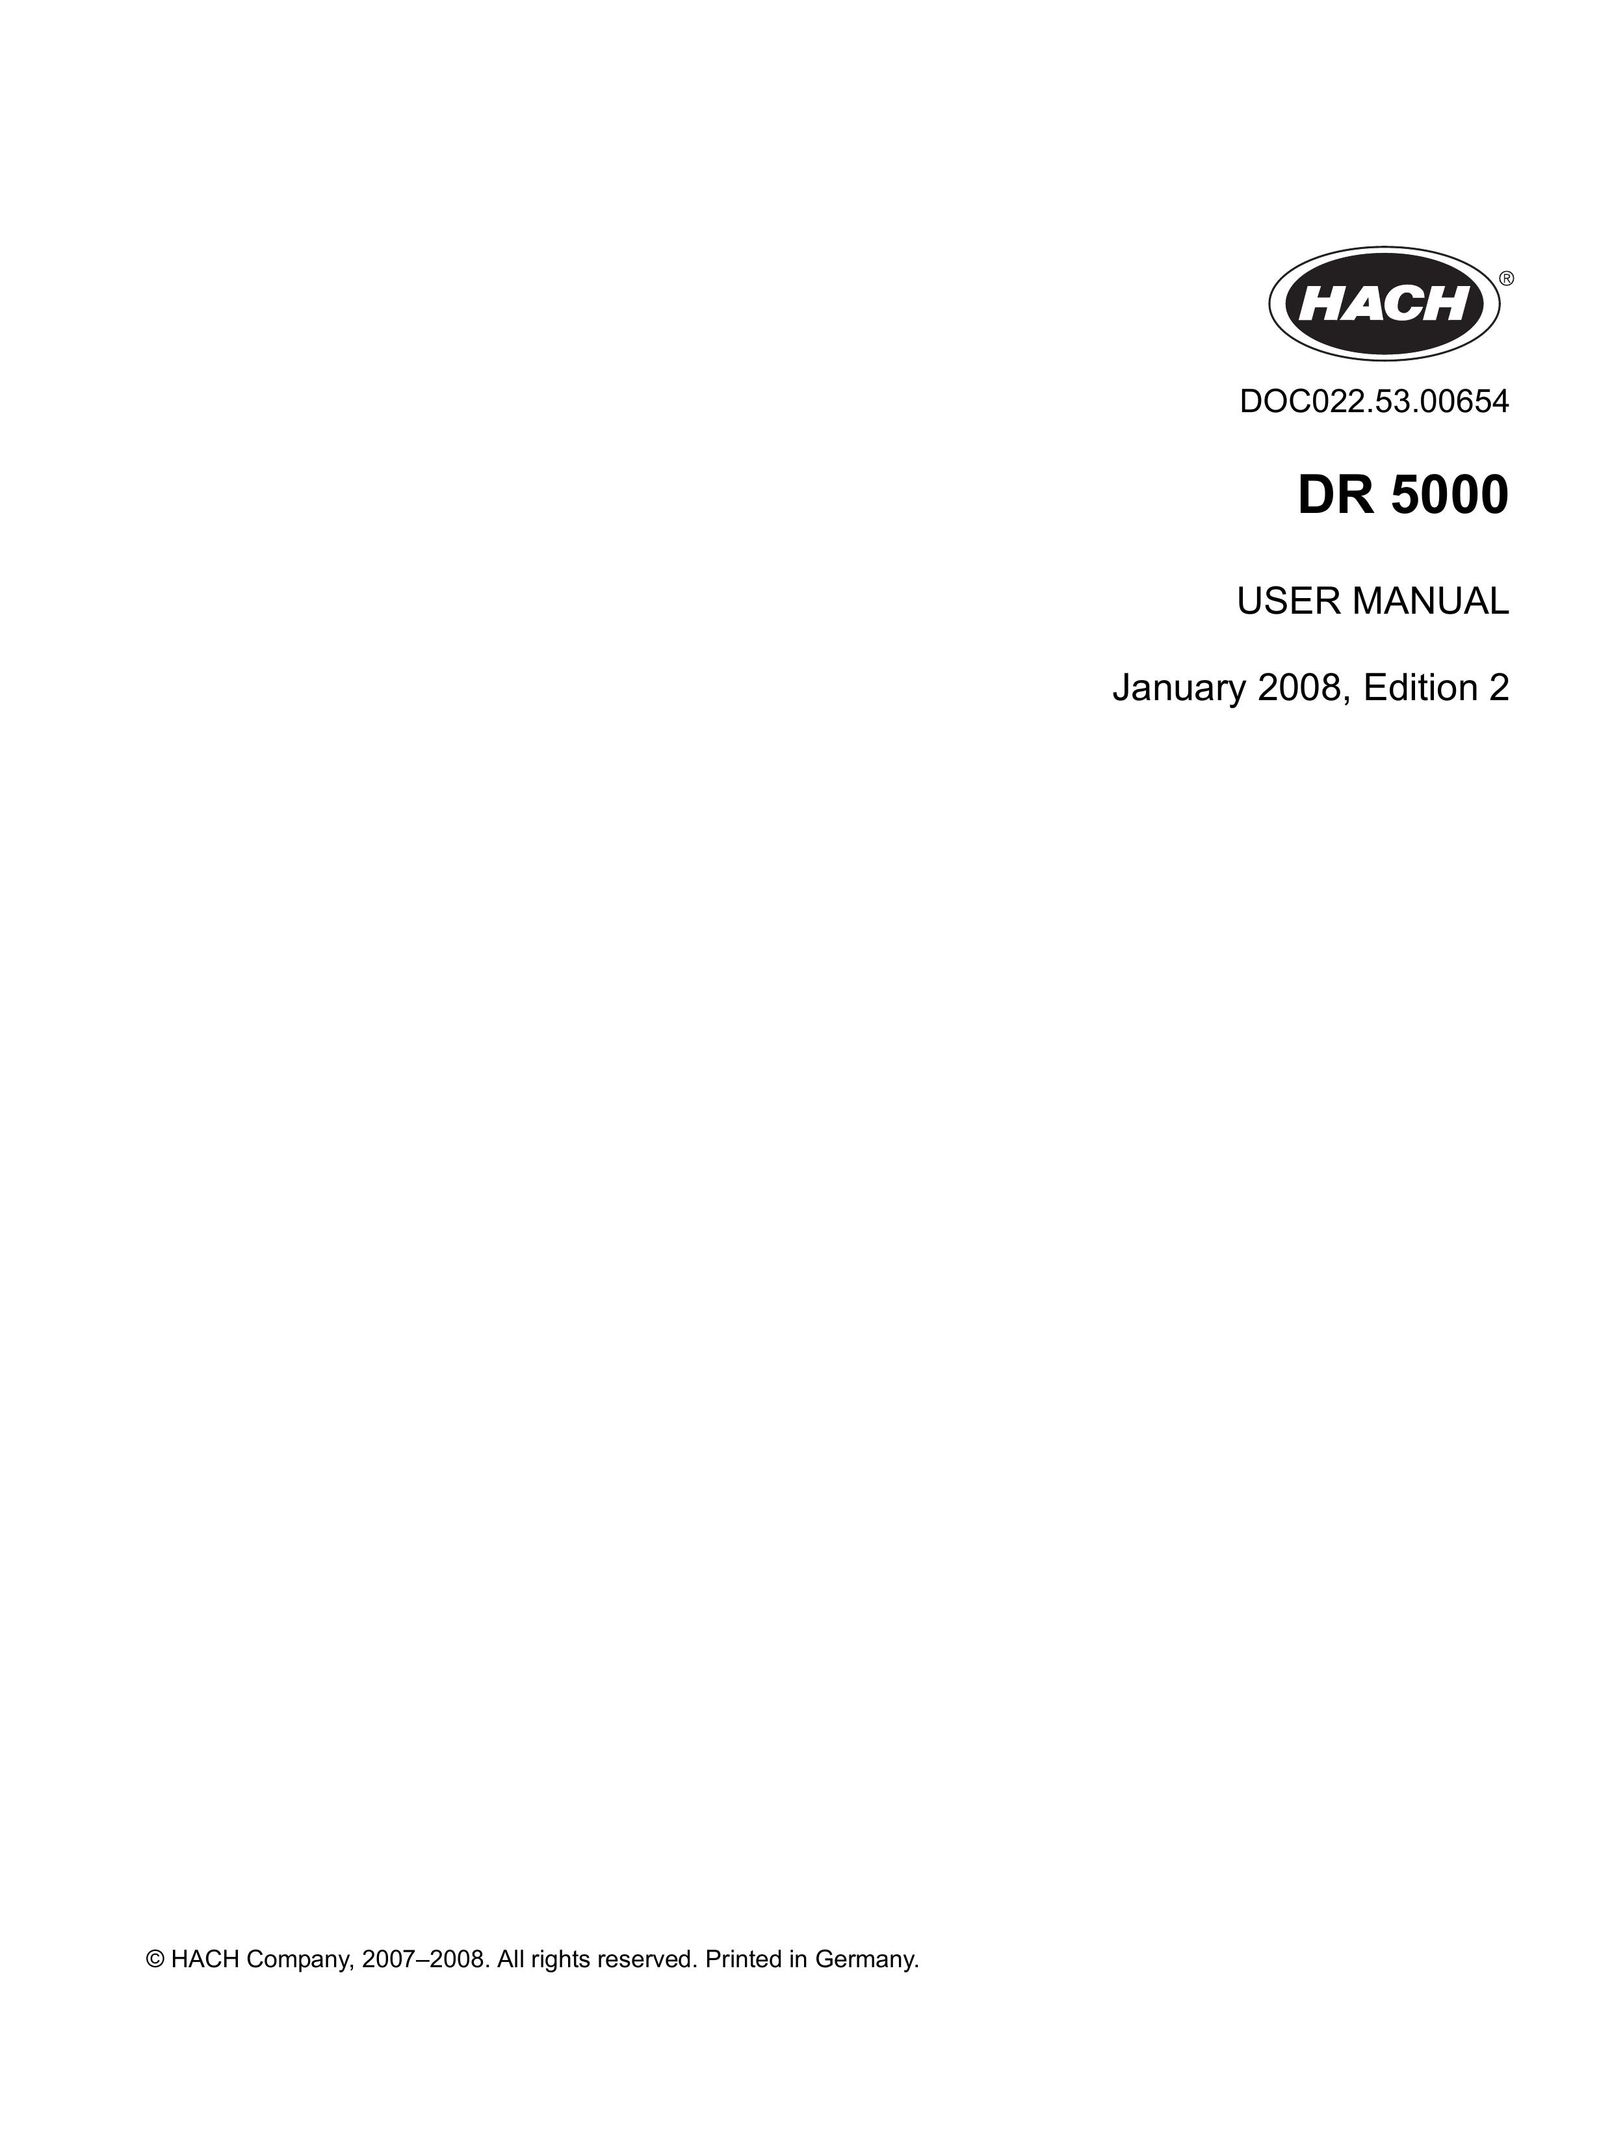 Hach DR 5000 Scanner User Manual